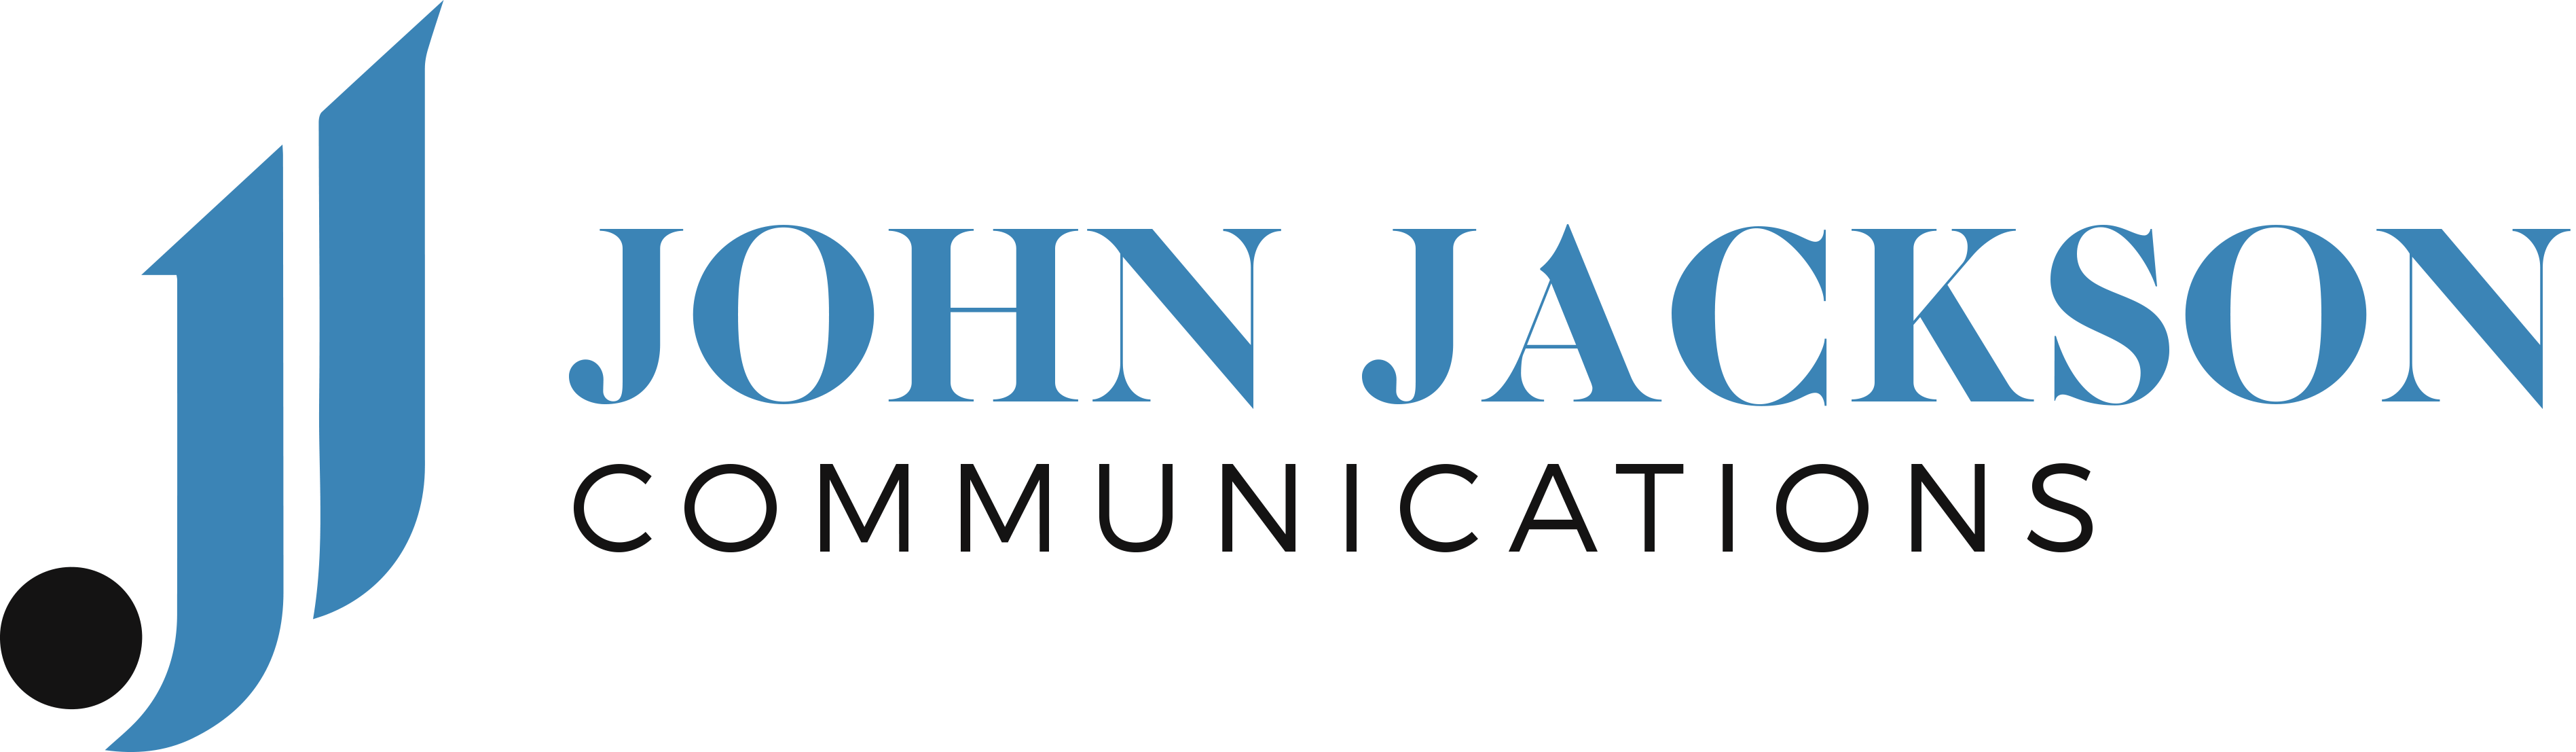 Dr. John Jackson Communications